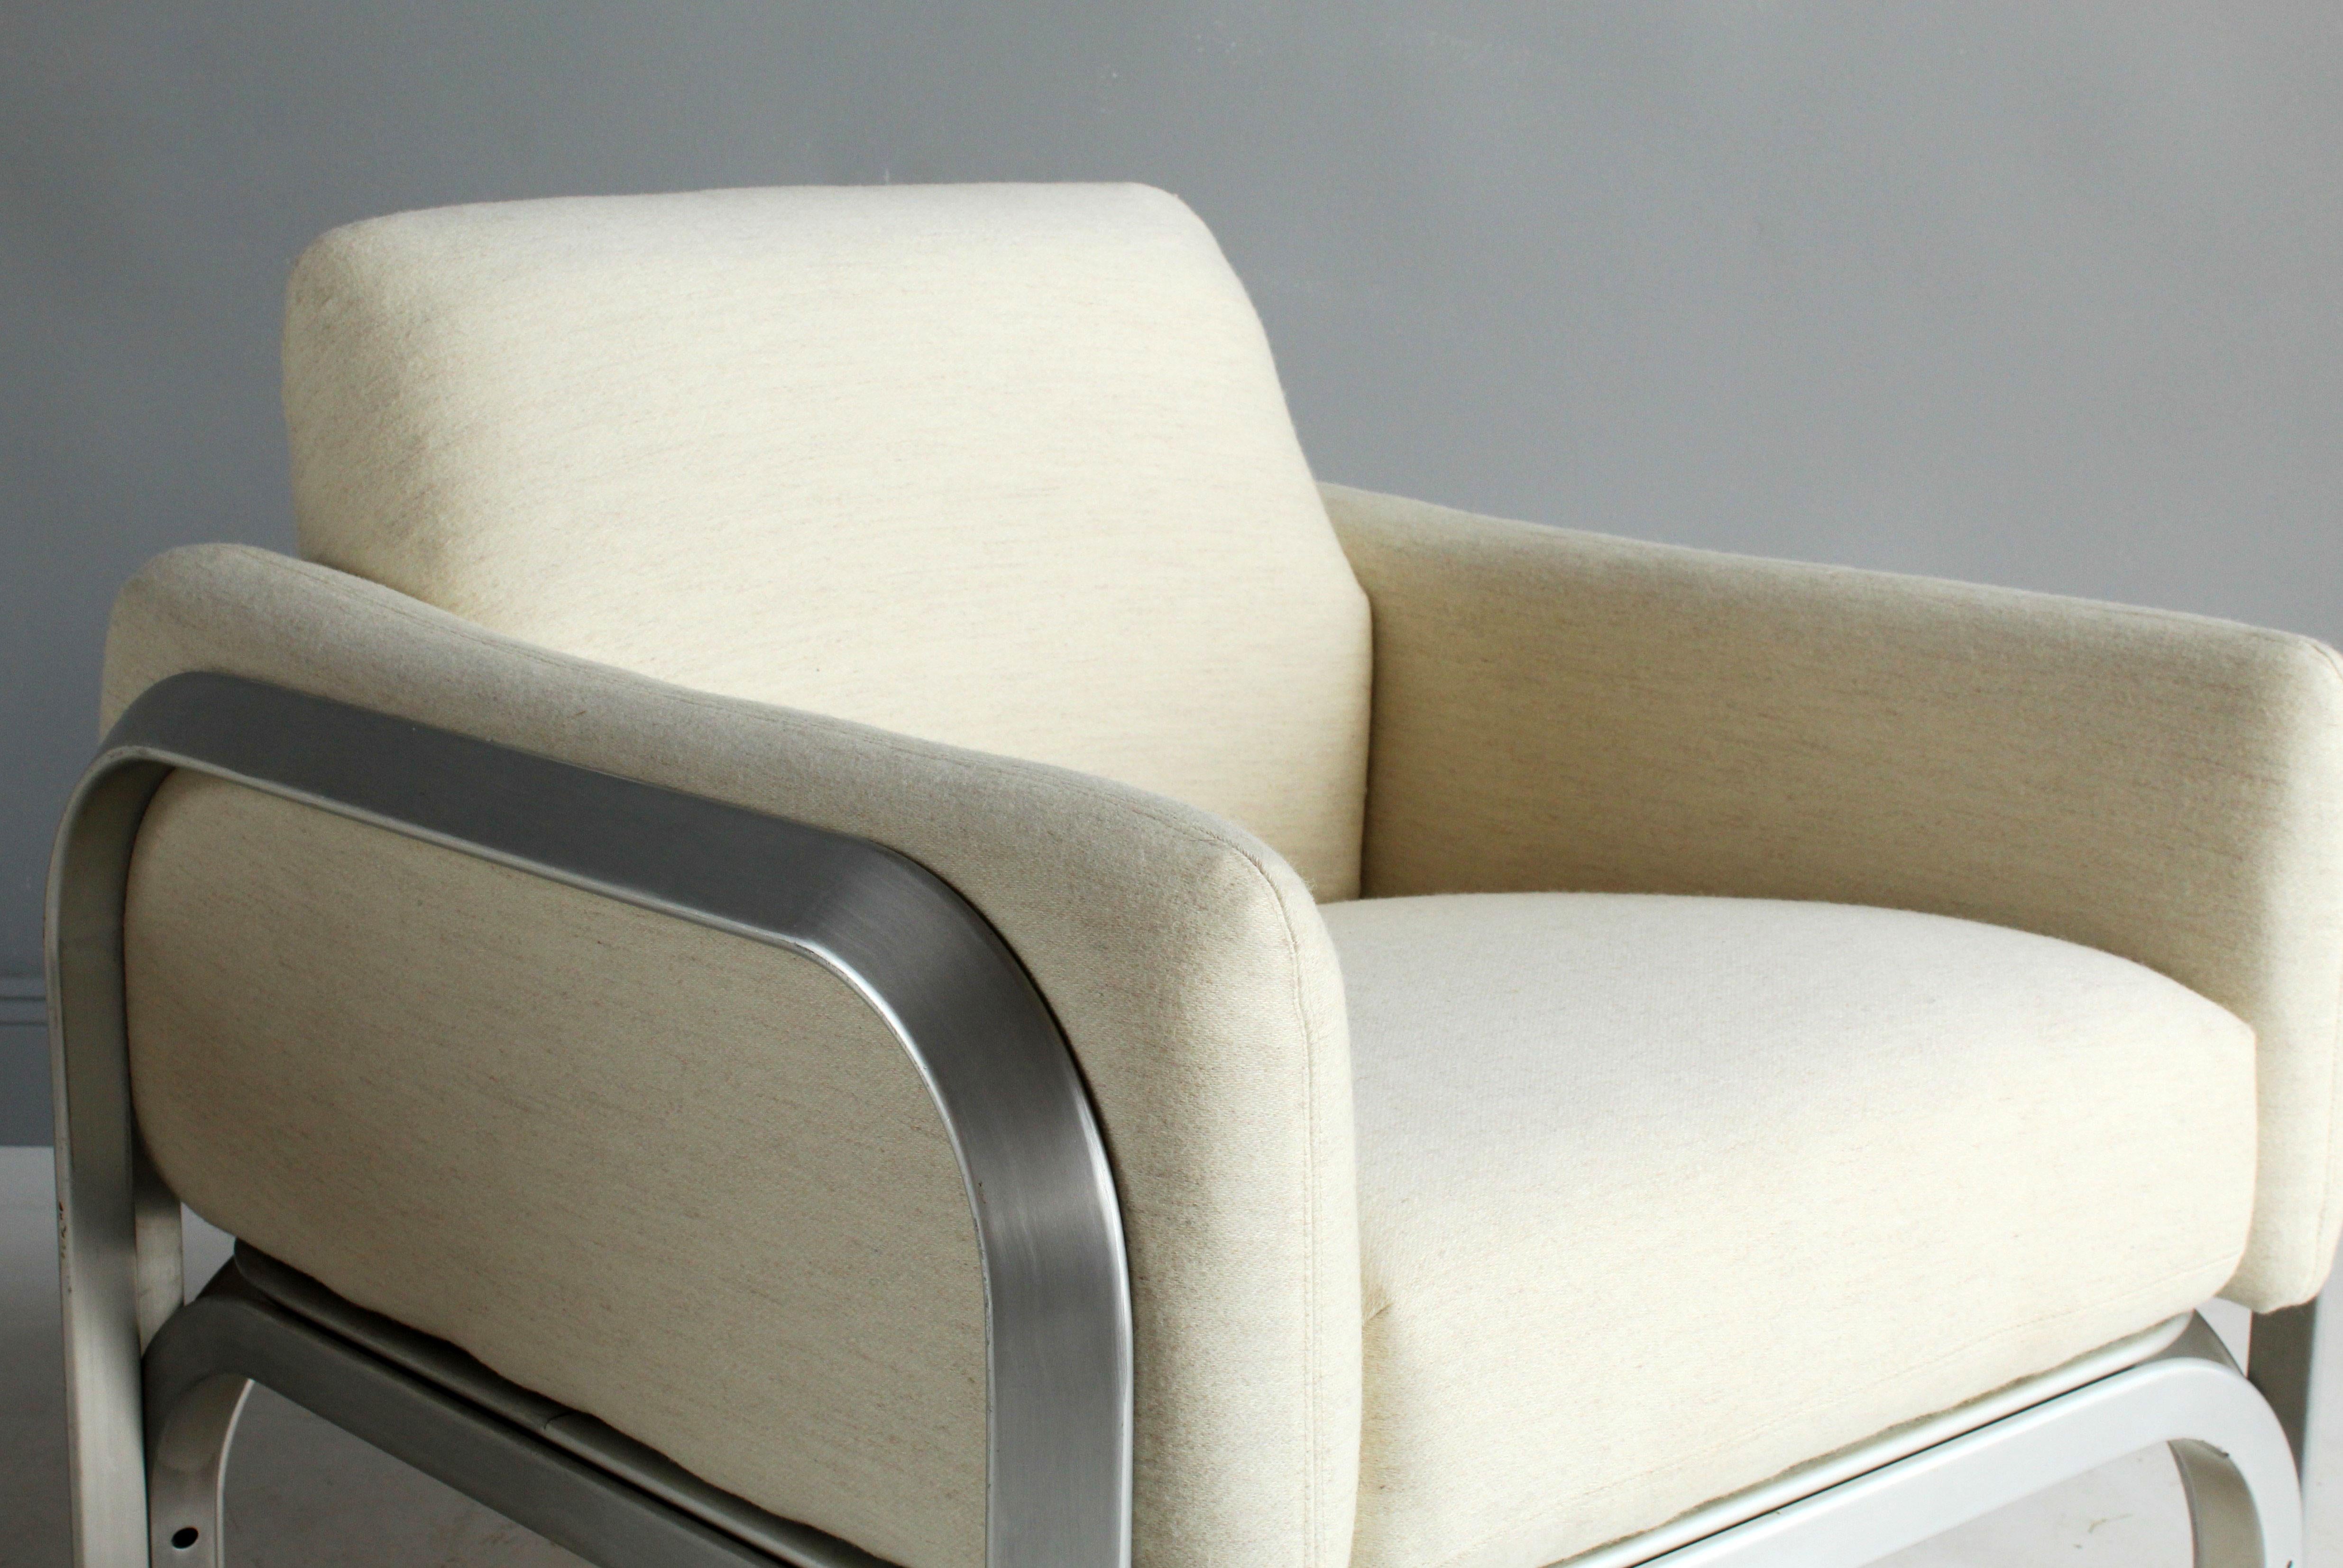 European Jørn Utzon, Lounge Chairs Designed for Sydney Opera House, Steel, Fabric, 1960s